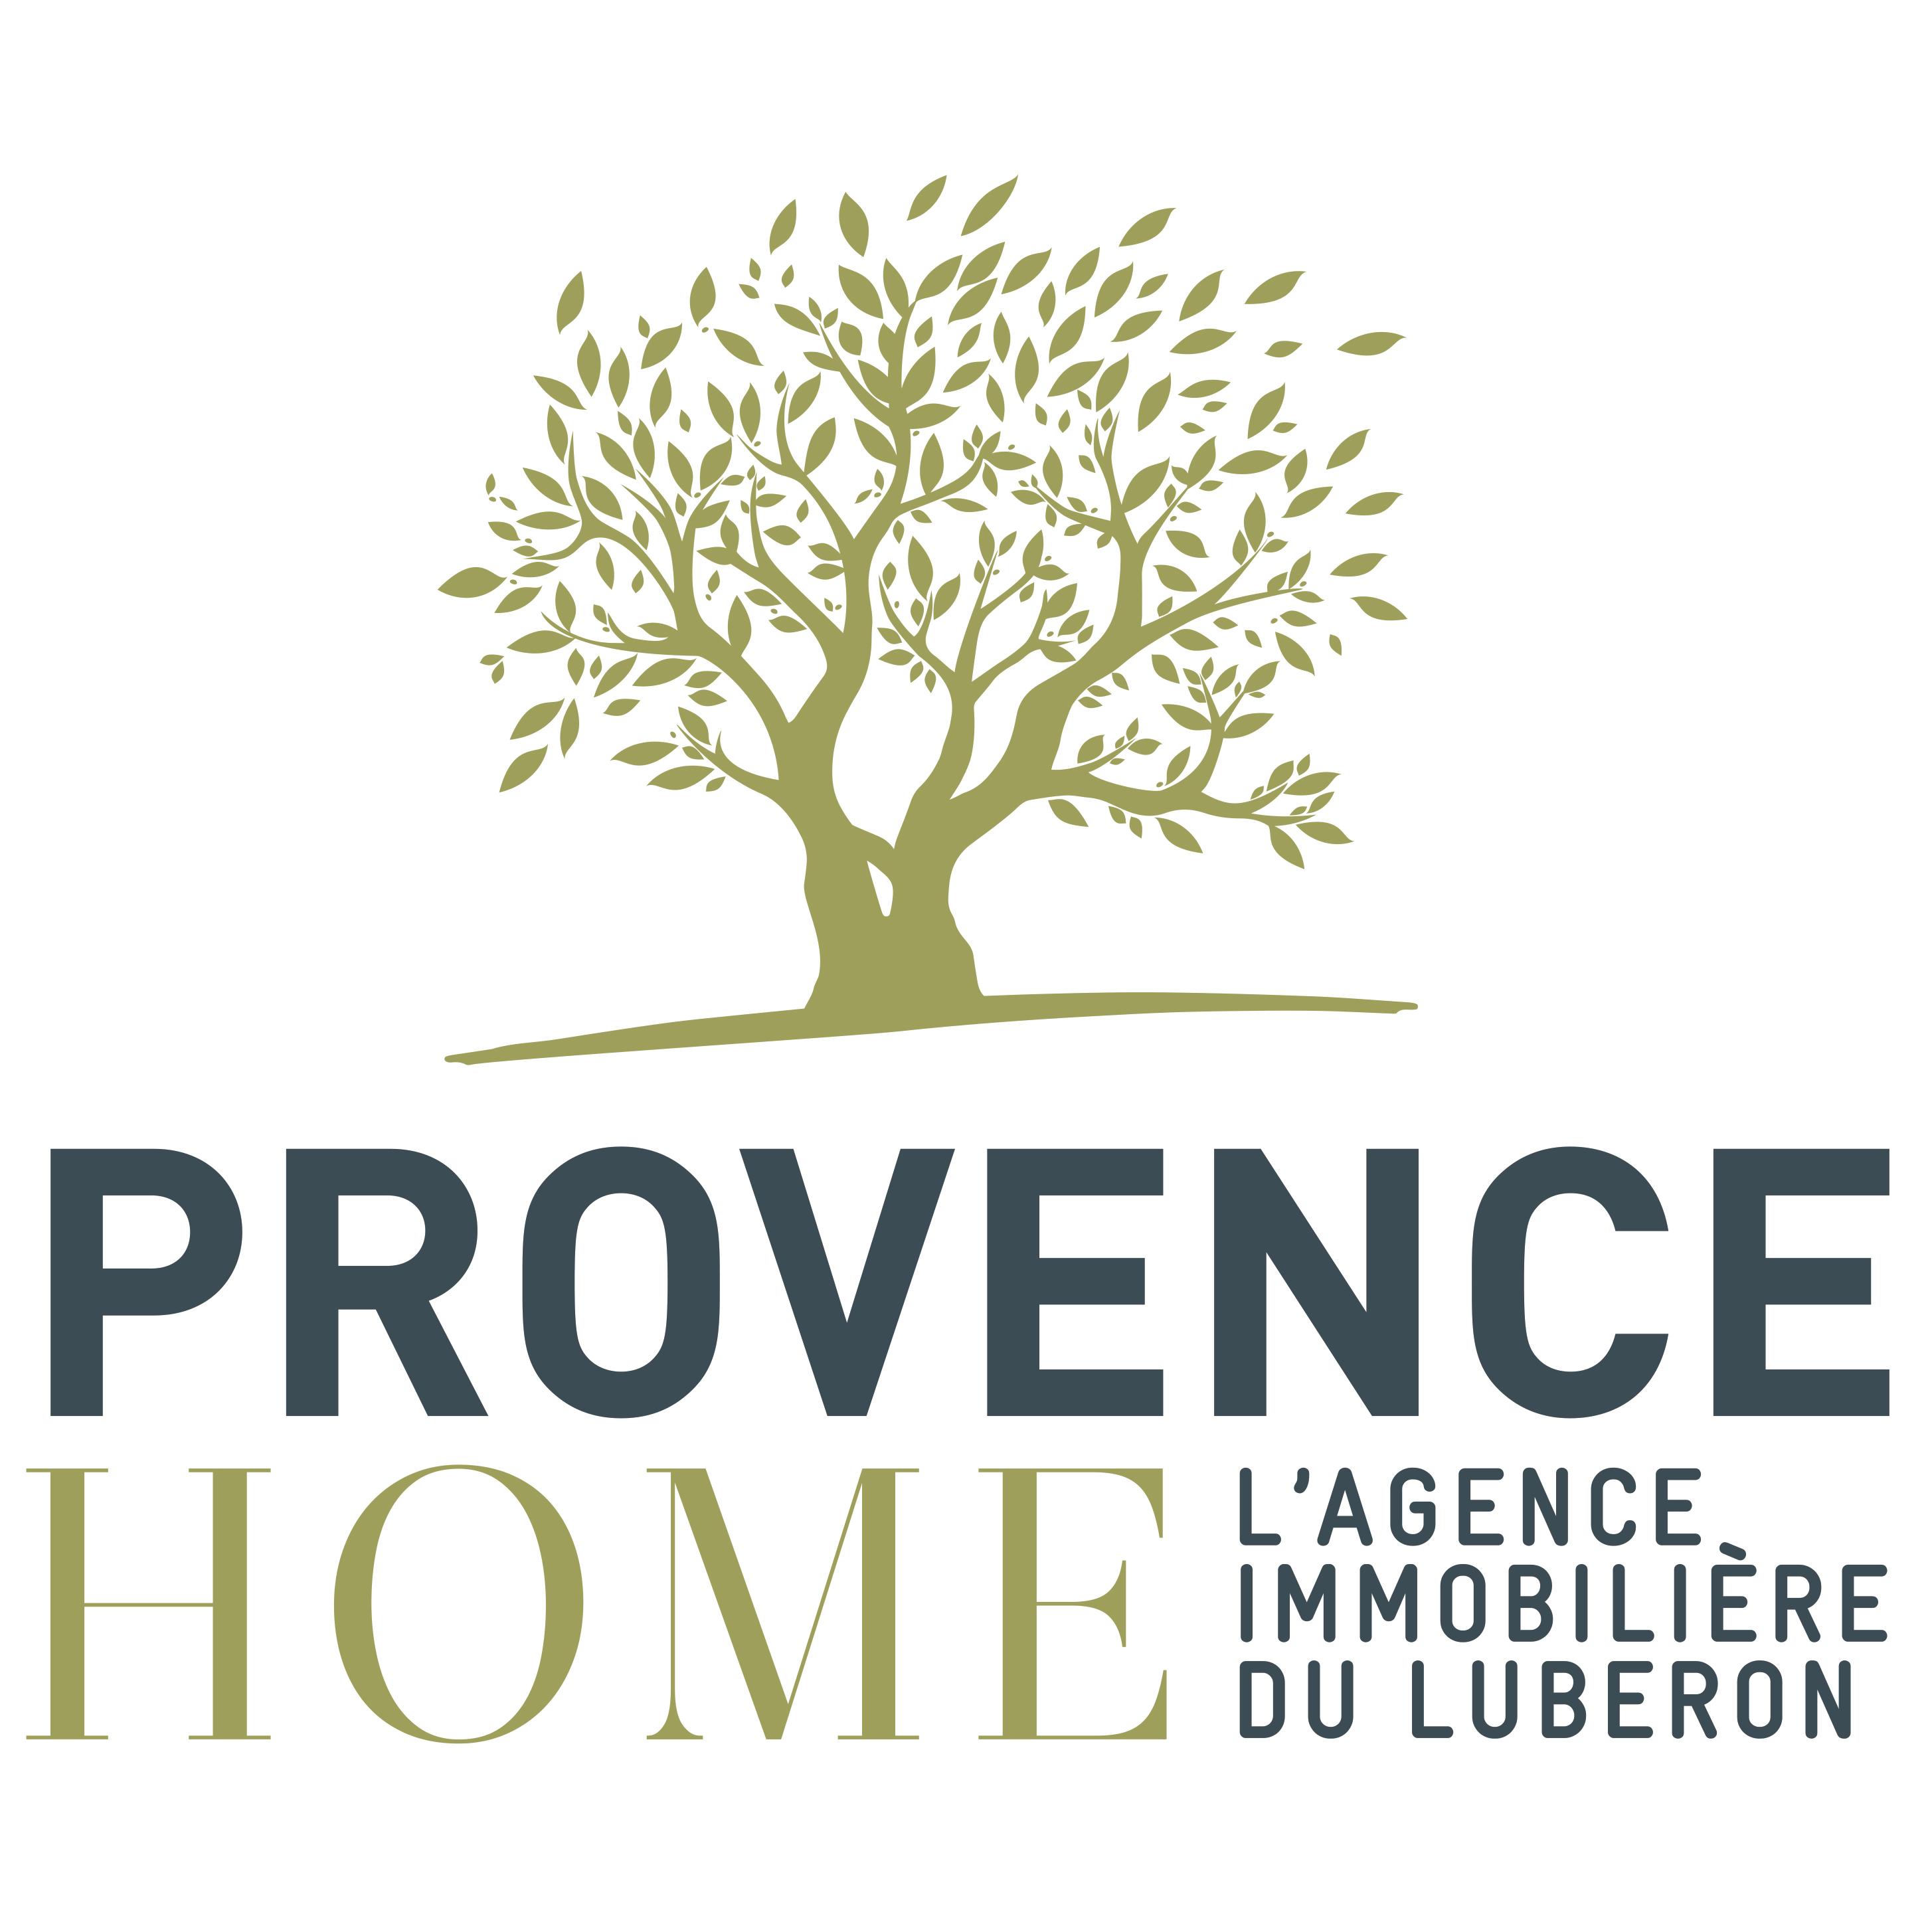 Provence Home Oppède